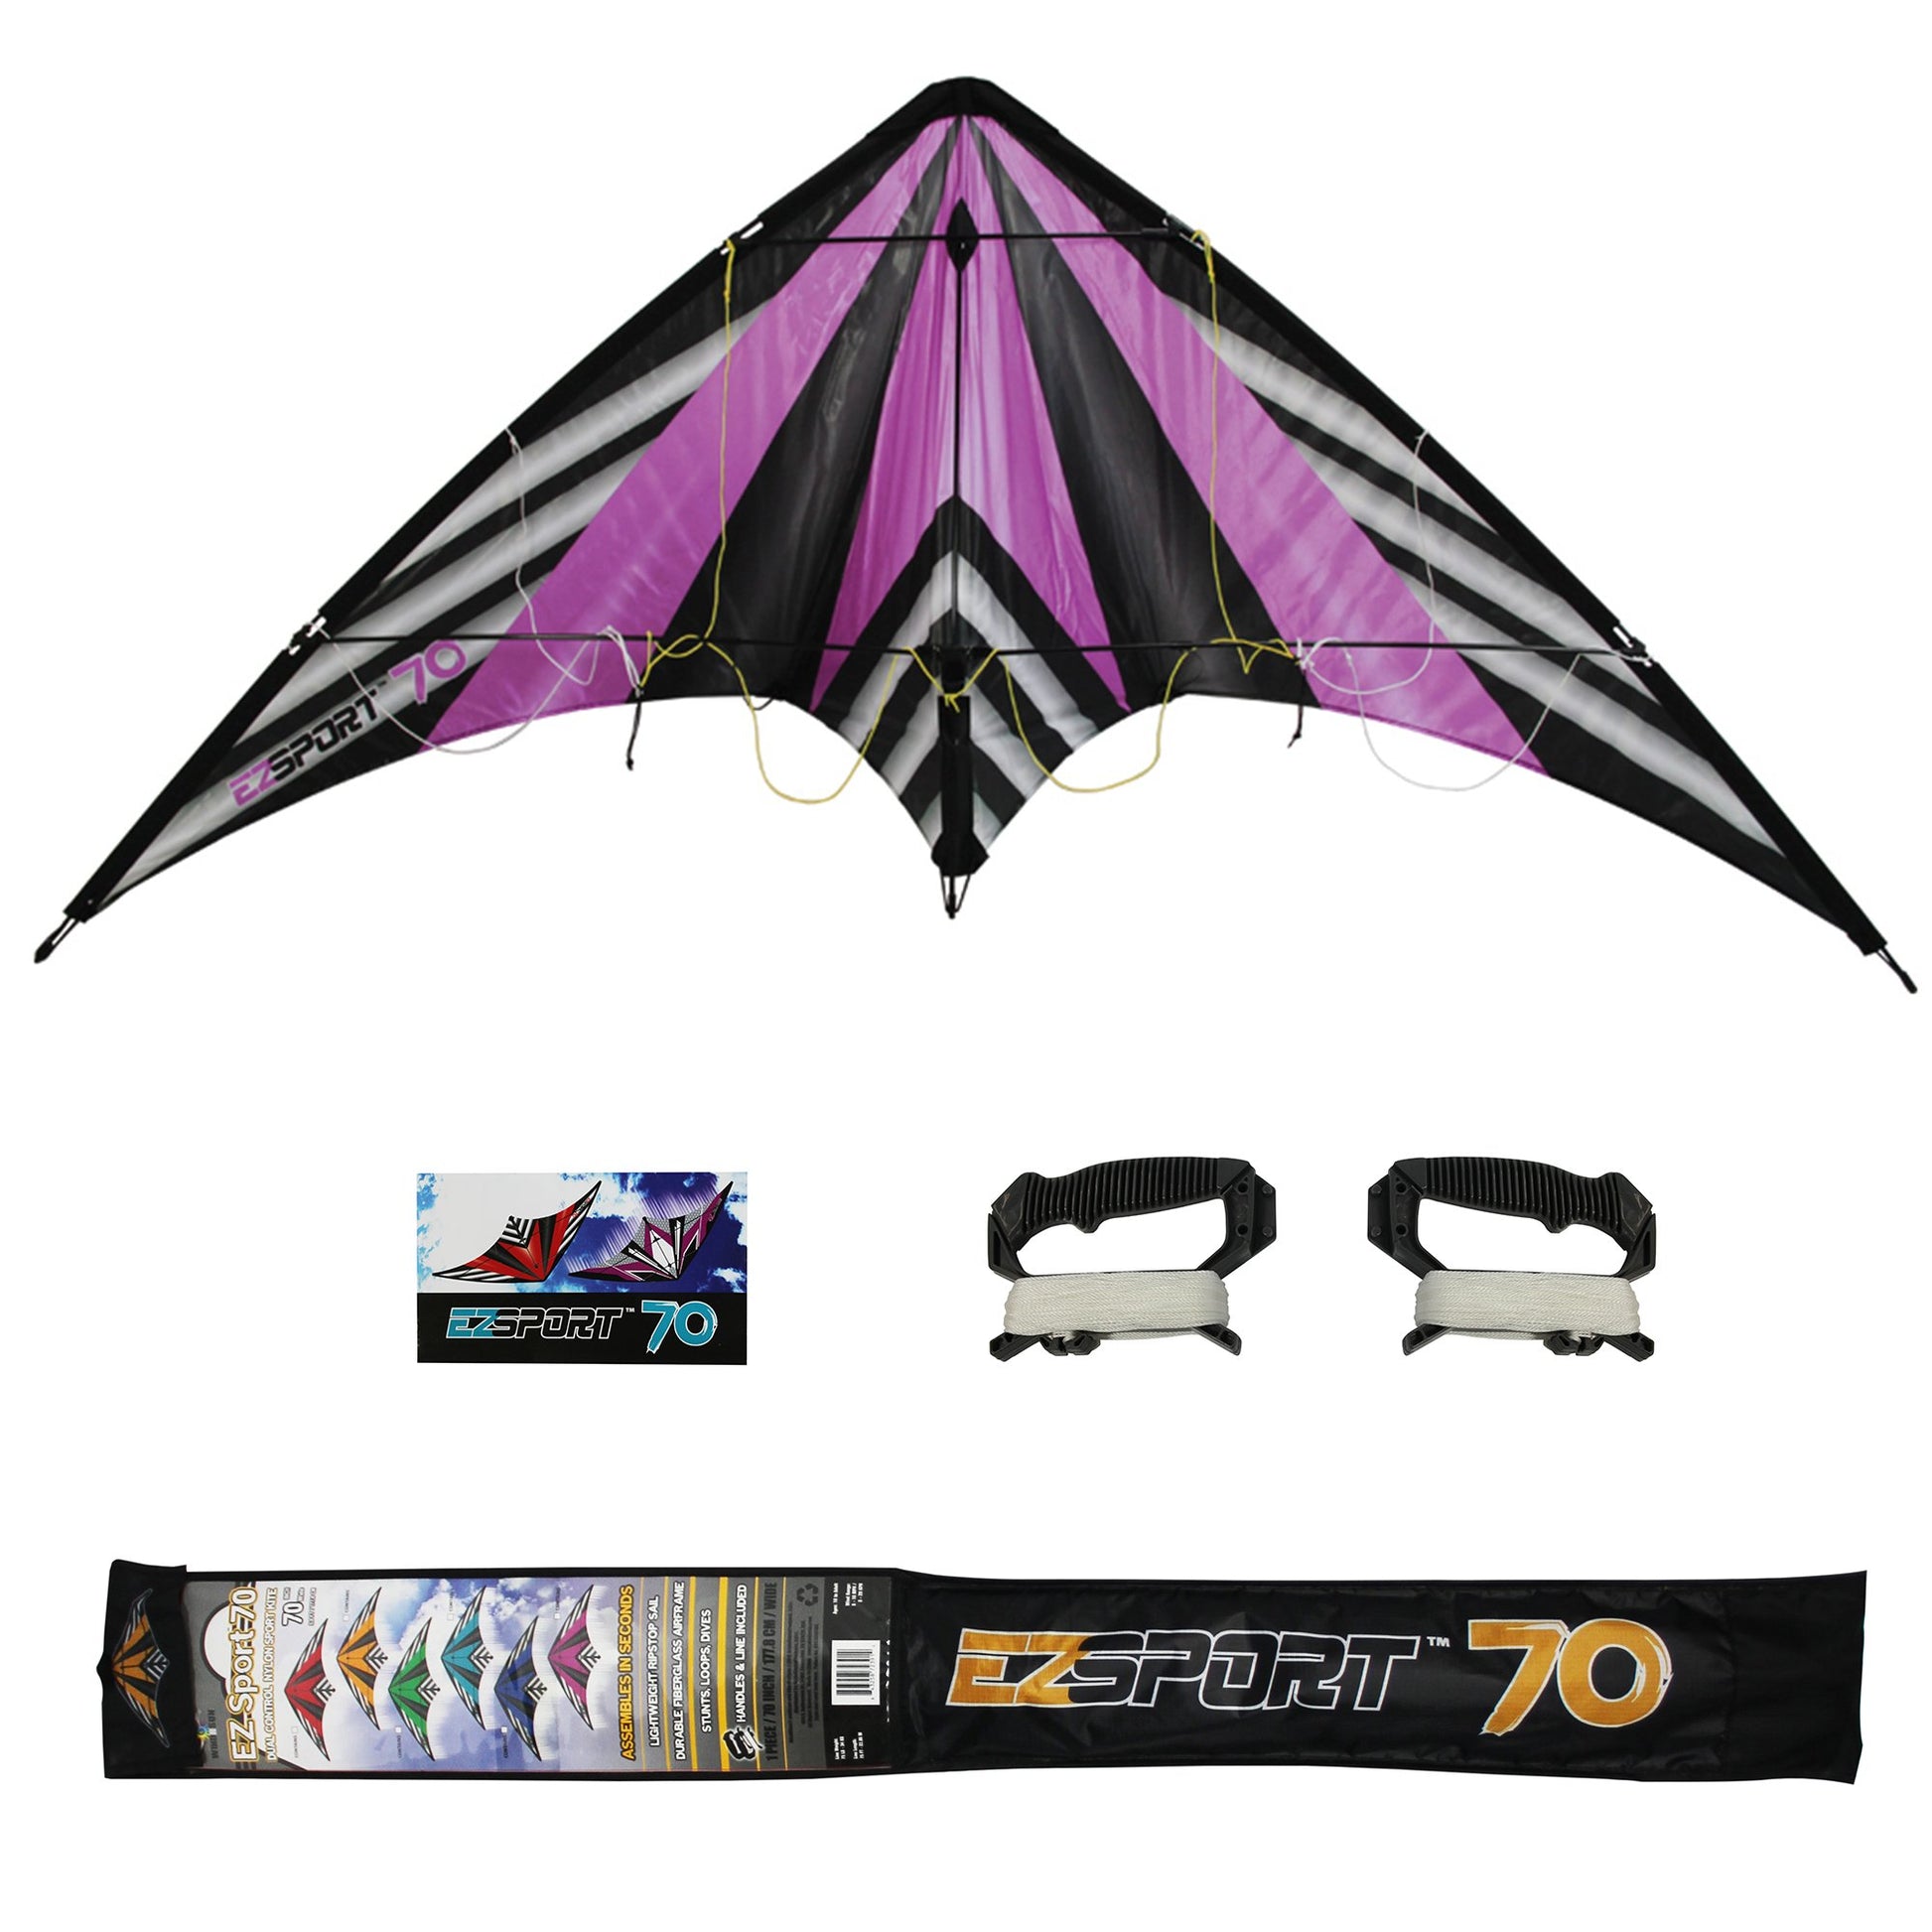 WindNSun EZ Sport 70 Dual Control Sport Kite Purple Stripe Nylon Kite photo showing handle